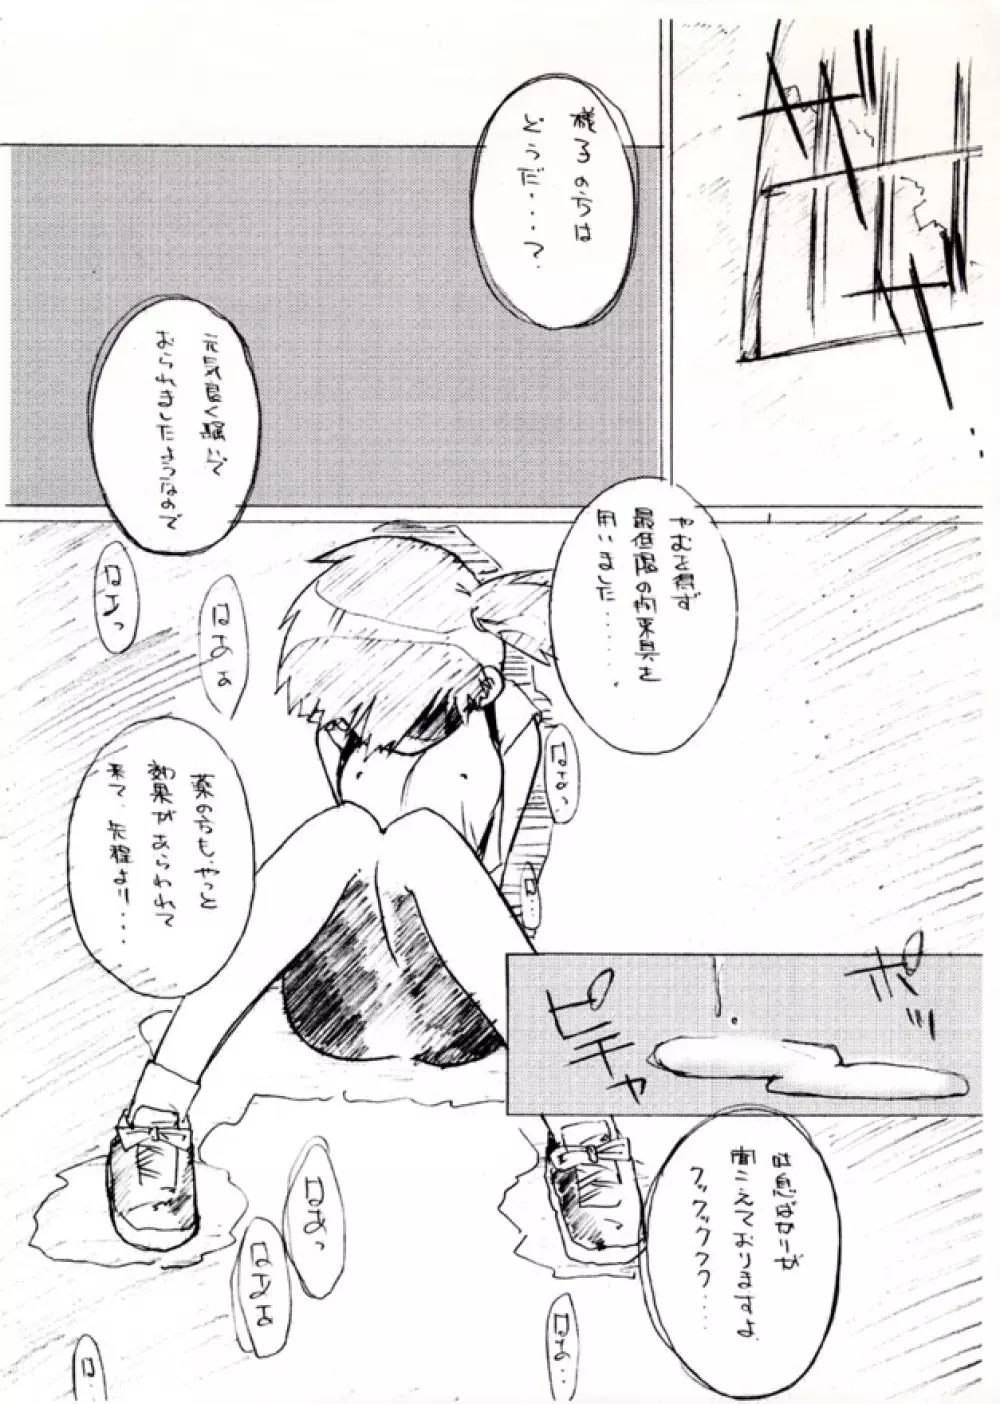 KASUMIX XPLOSION Kasumi Comic part5 - page12